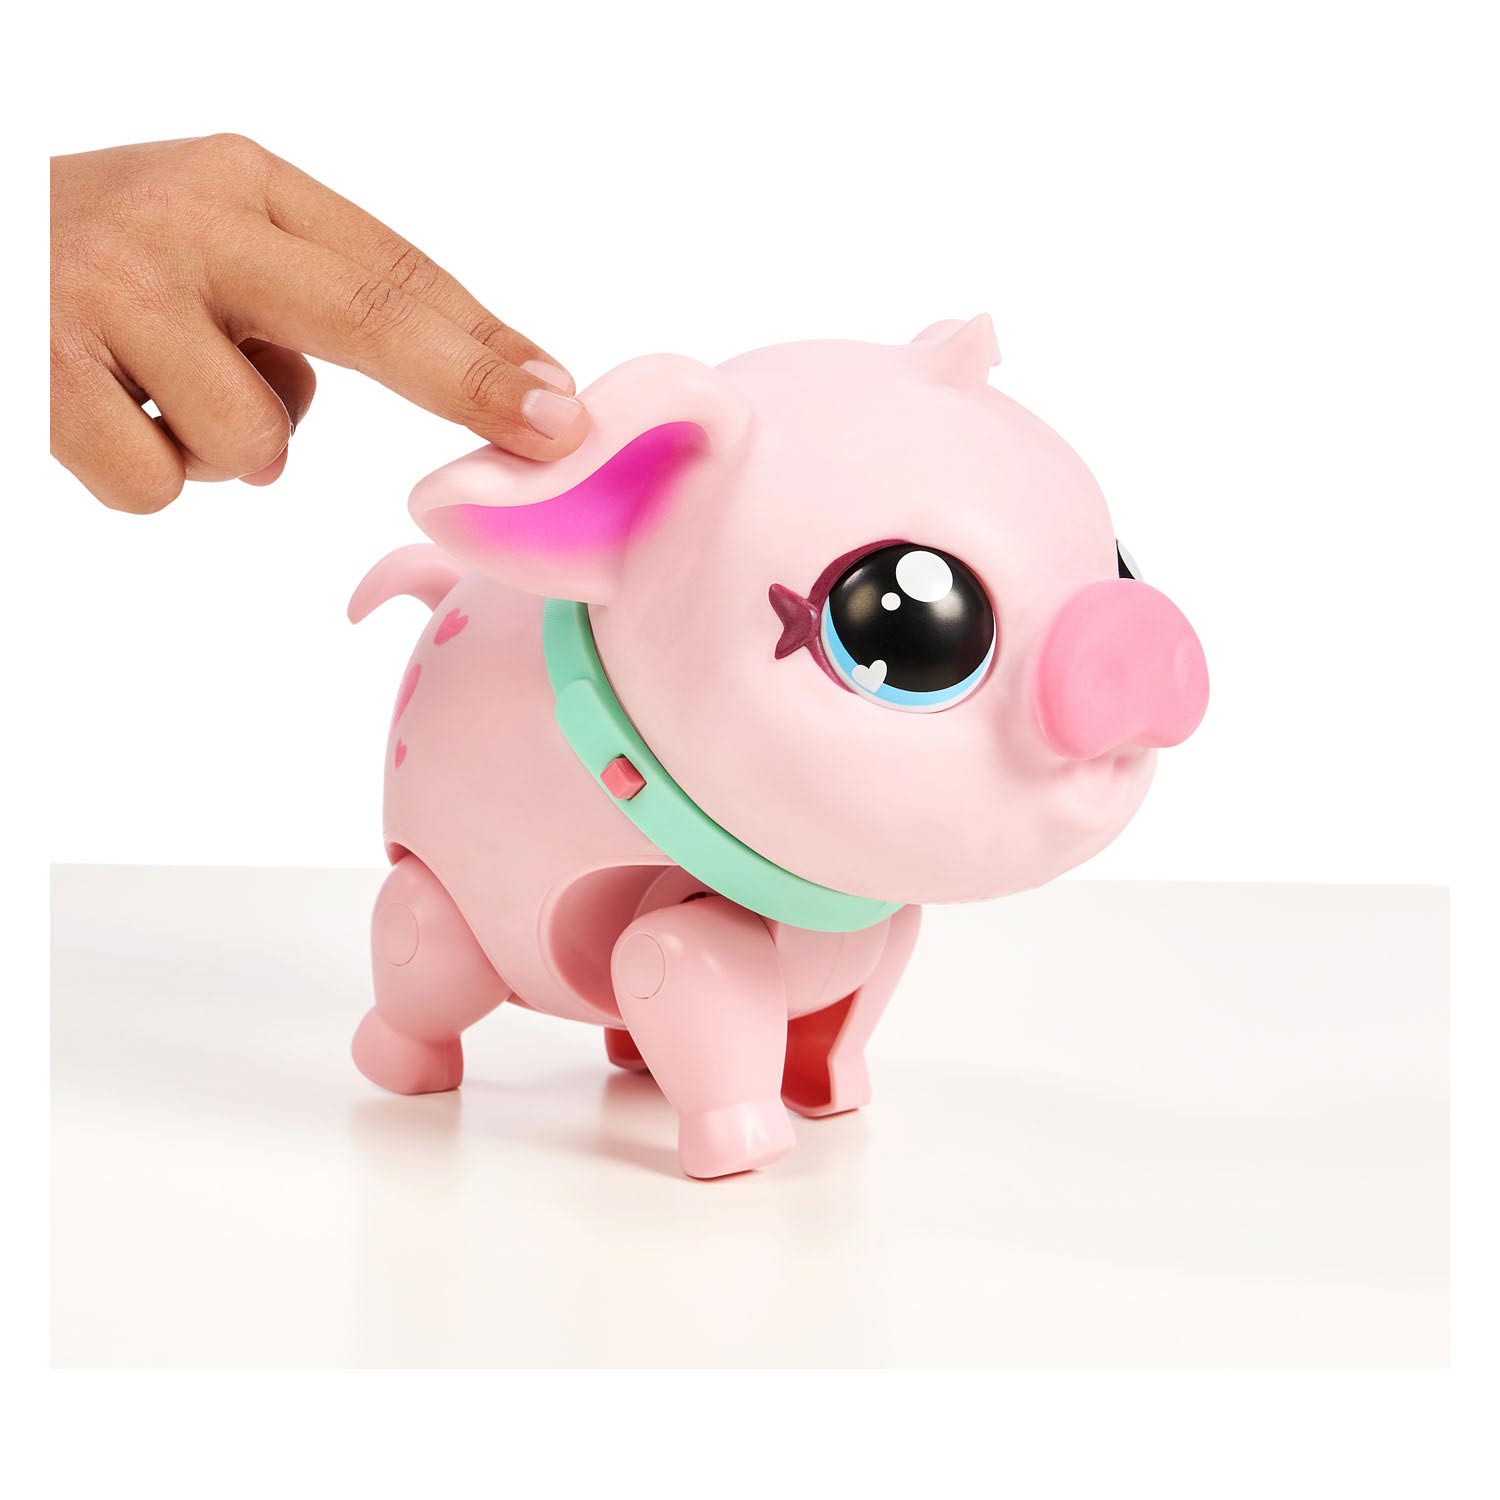 Mon cochon de compagnie interactif Pig Piggly